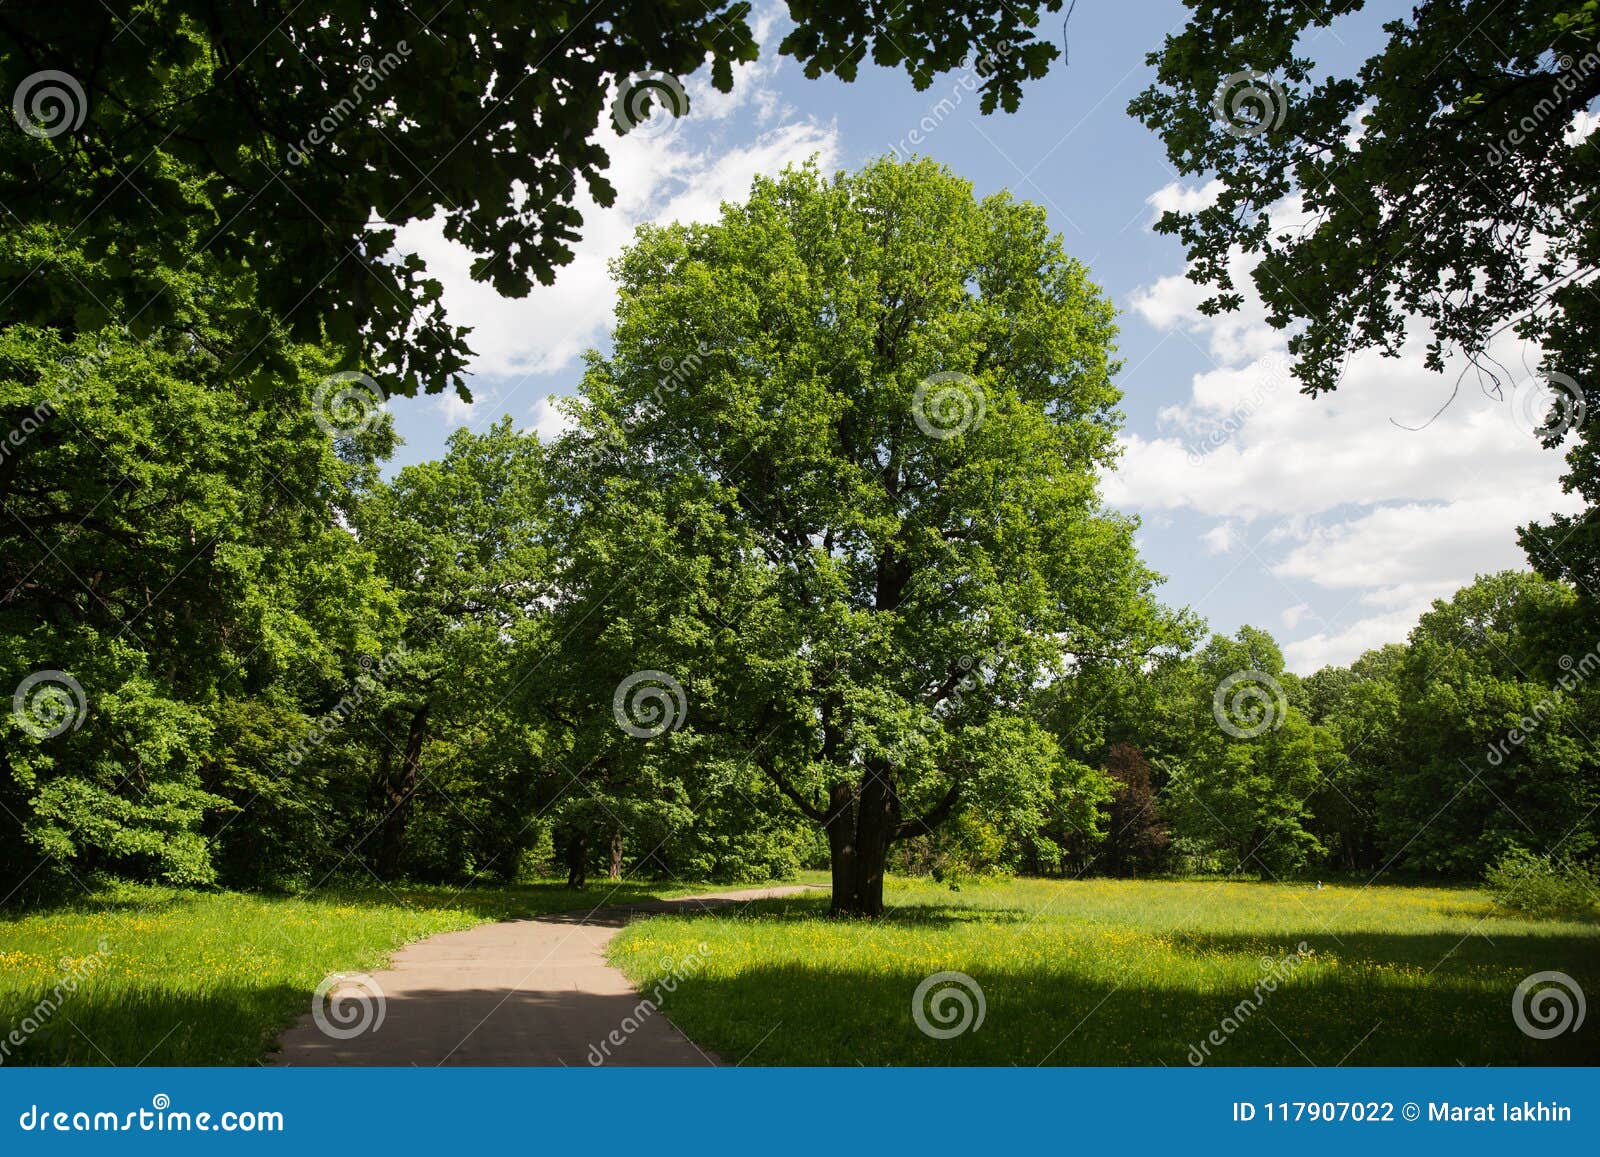 Oak tree in park stock photo. Image of leaves, landscape - 117907022